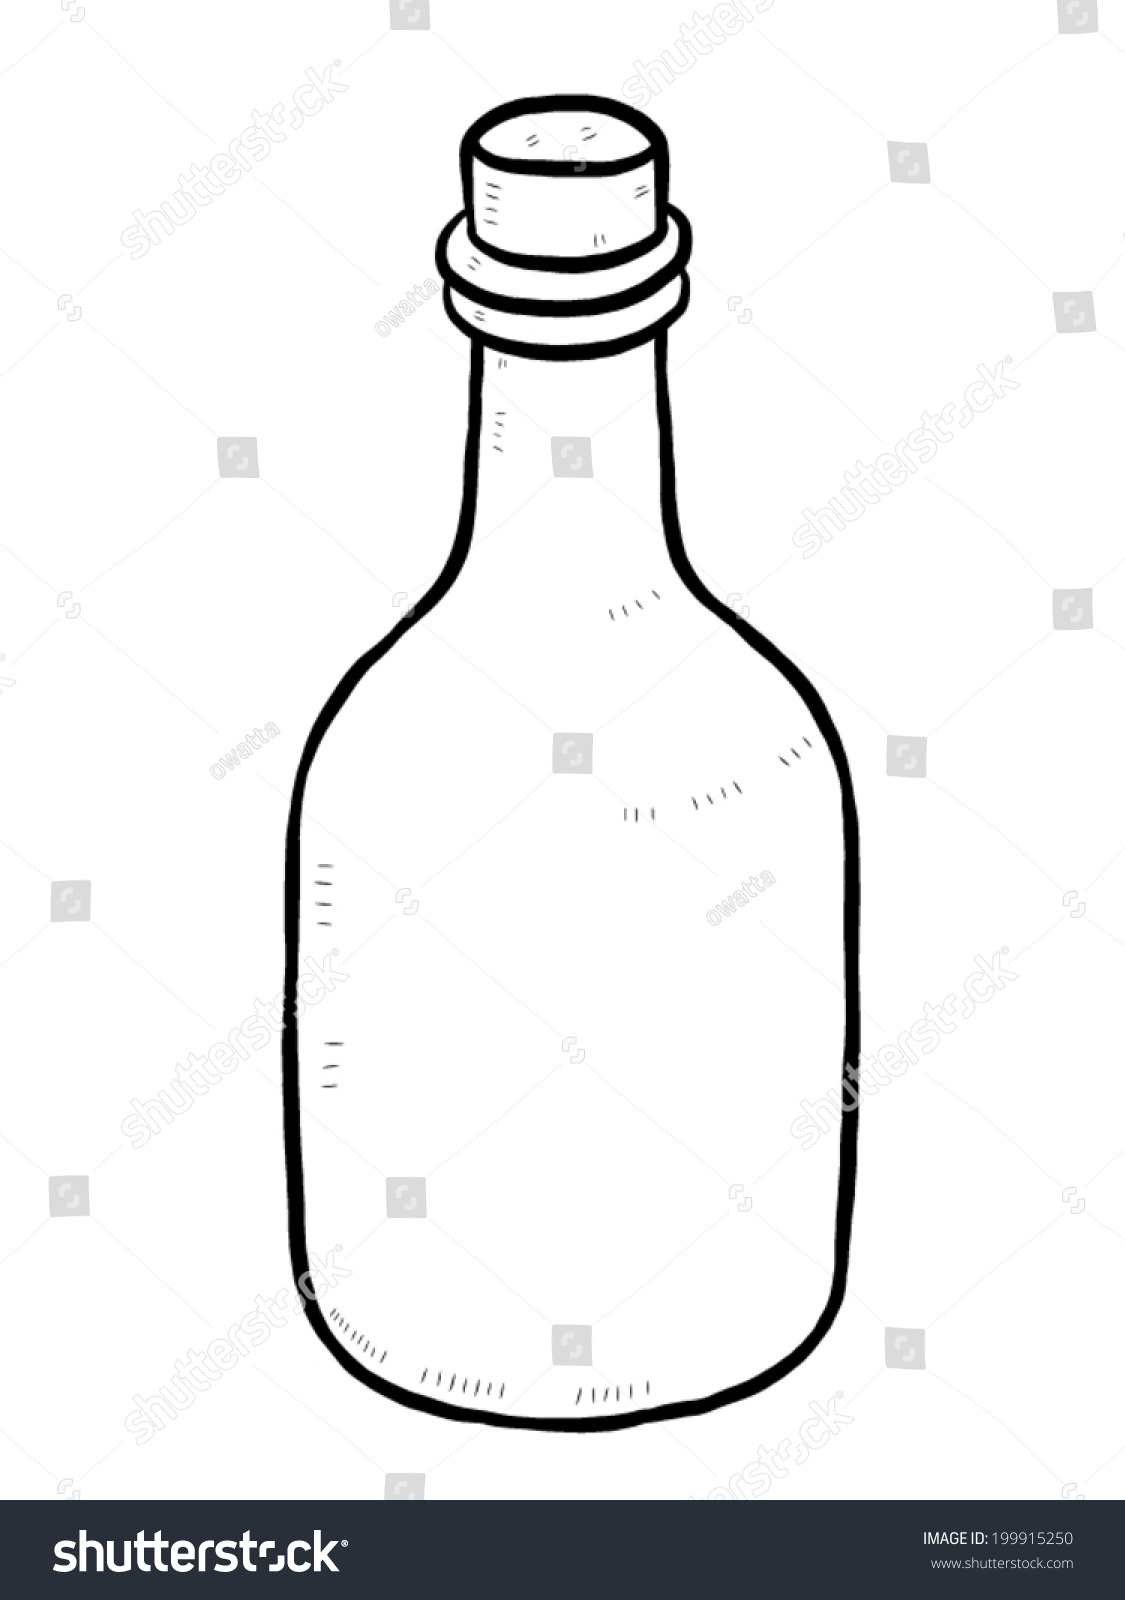 clipart glass bottle - photo #49